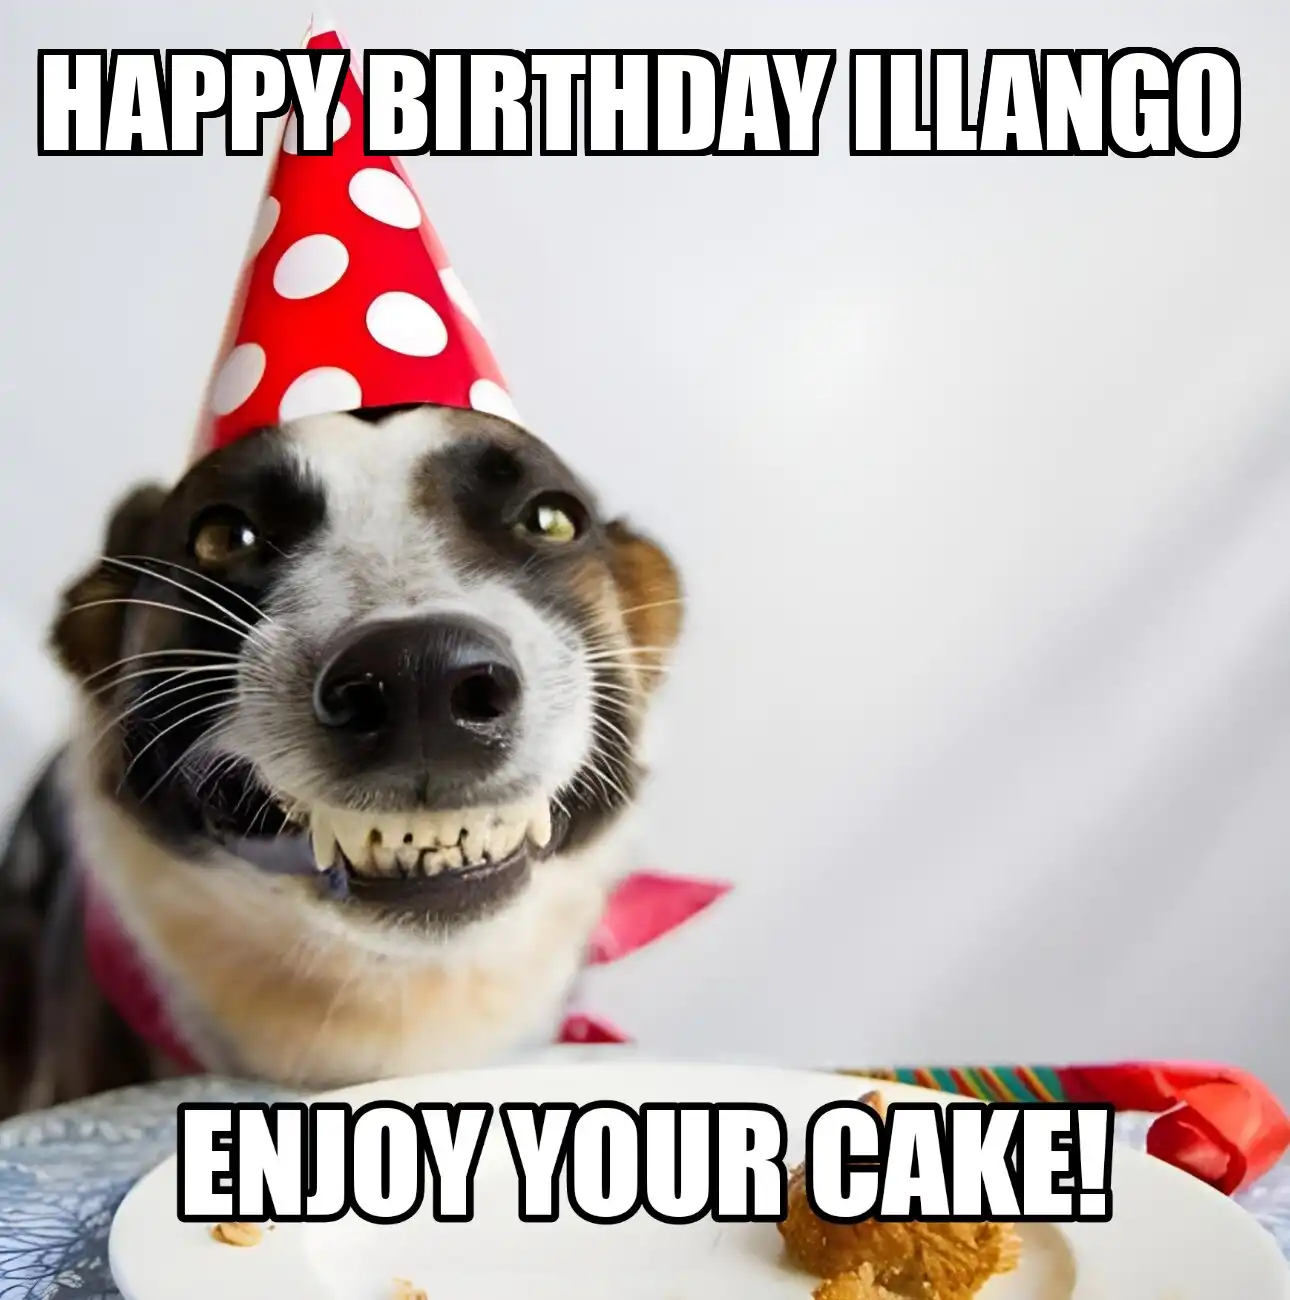 Happy Birthday Illango Enjoy Your Cake Dog Meme